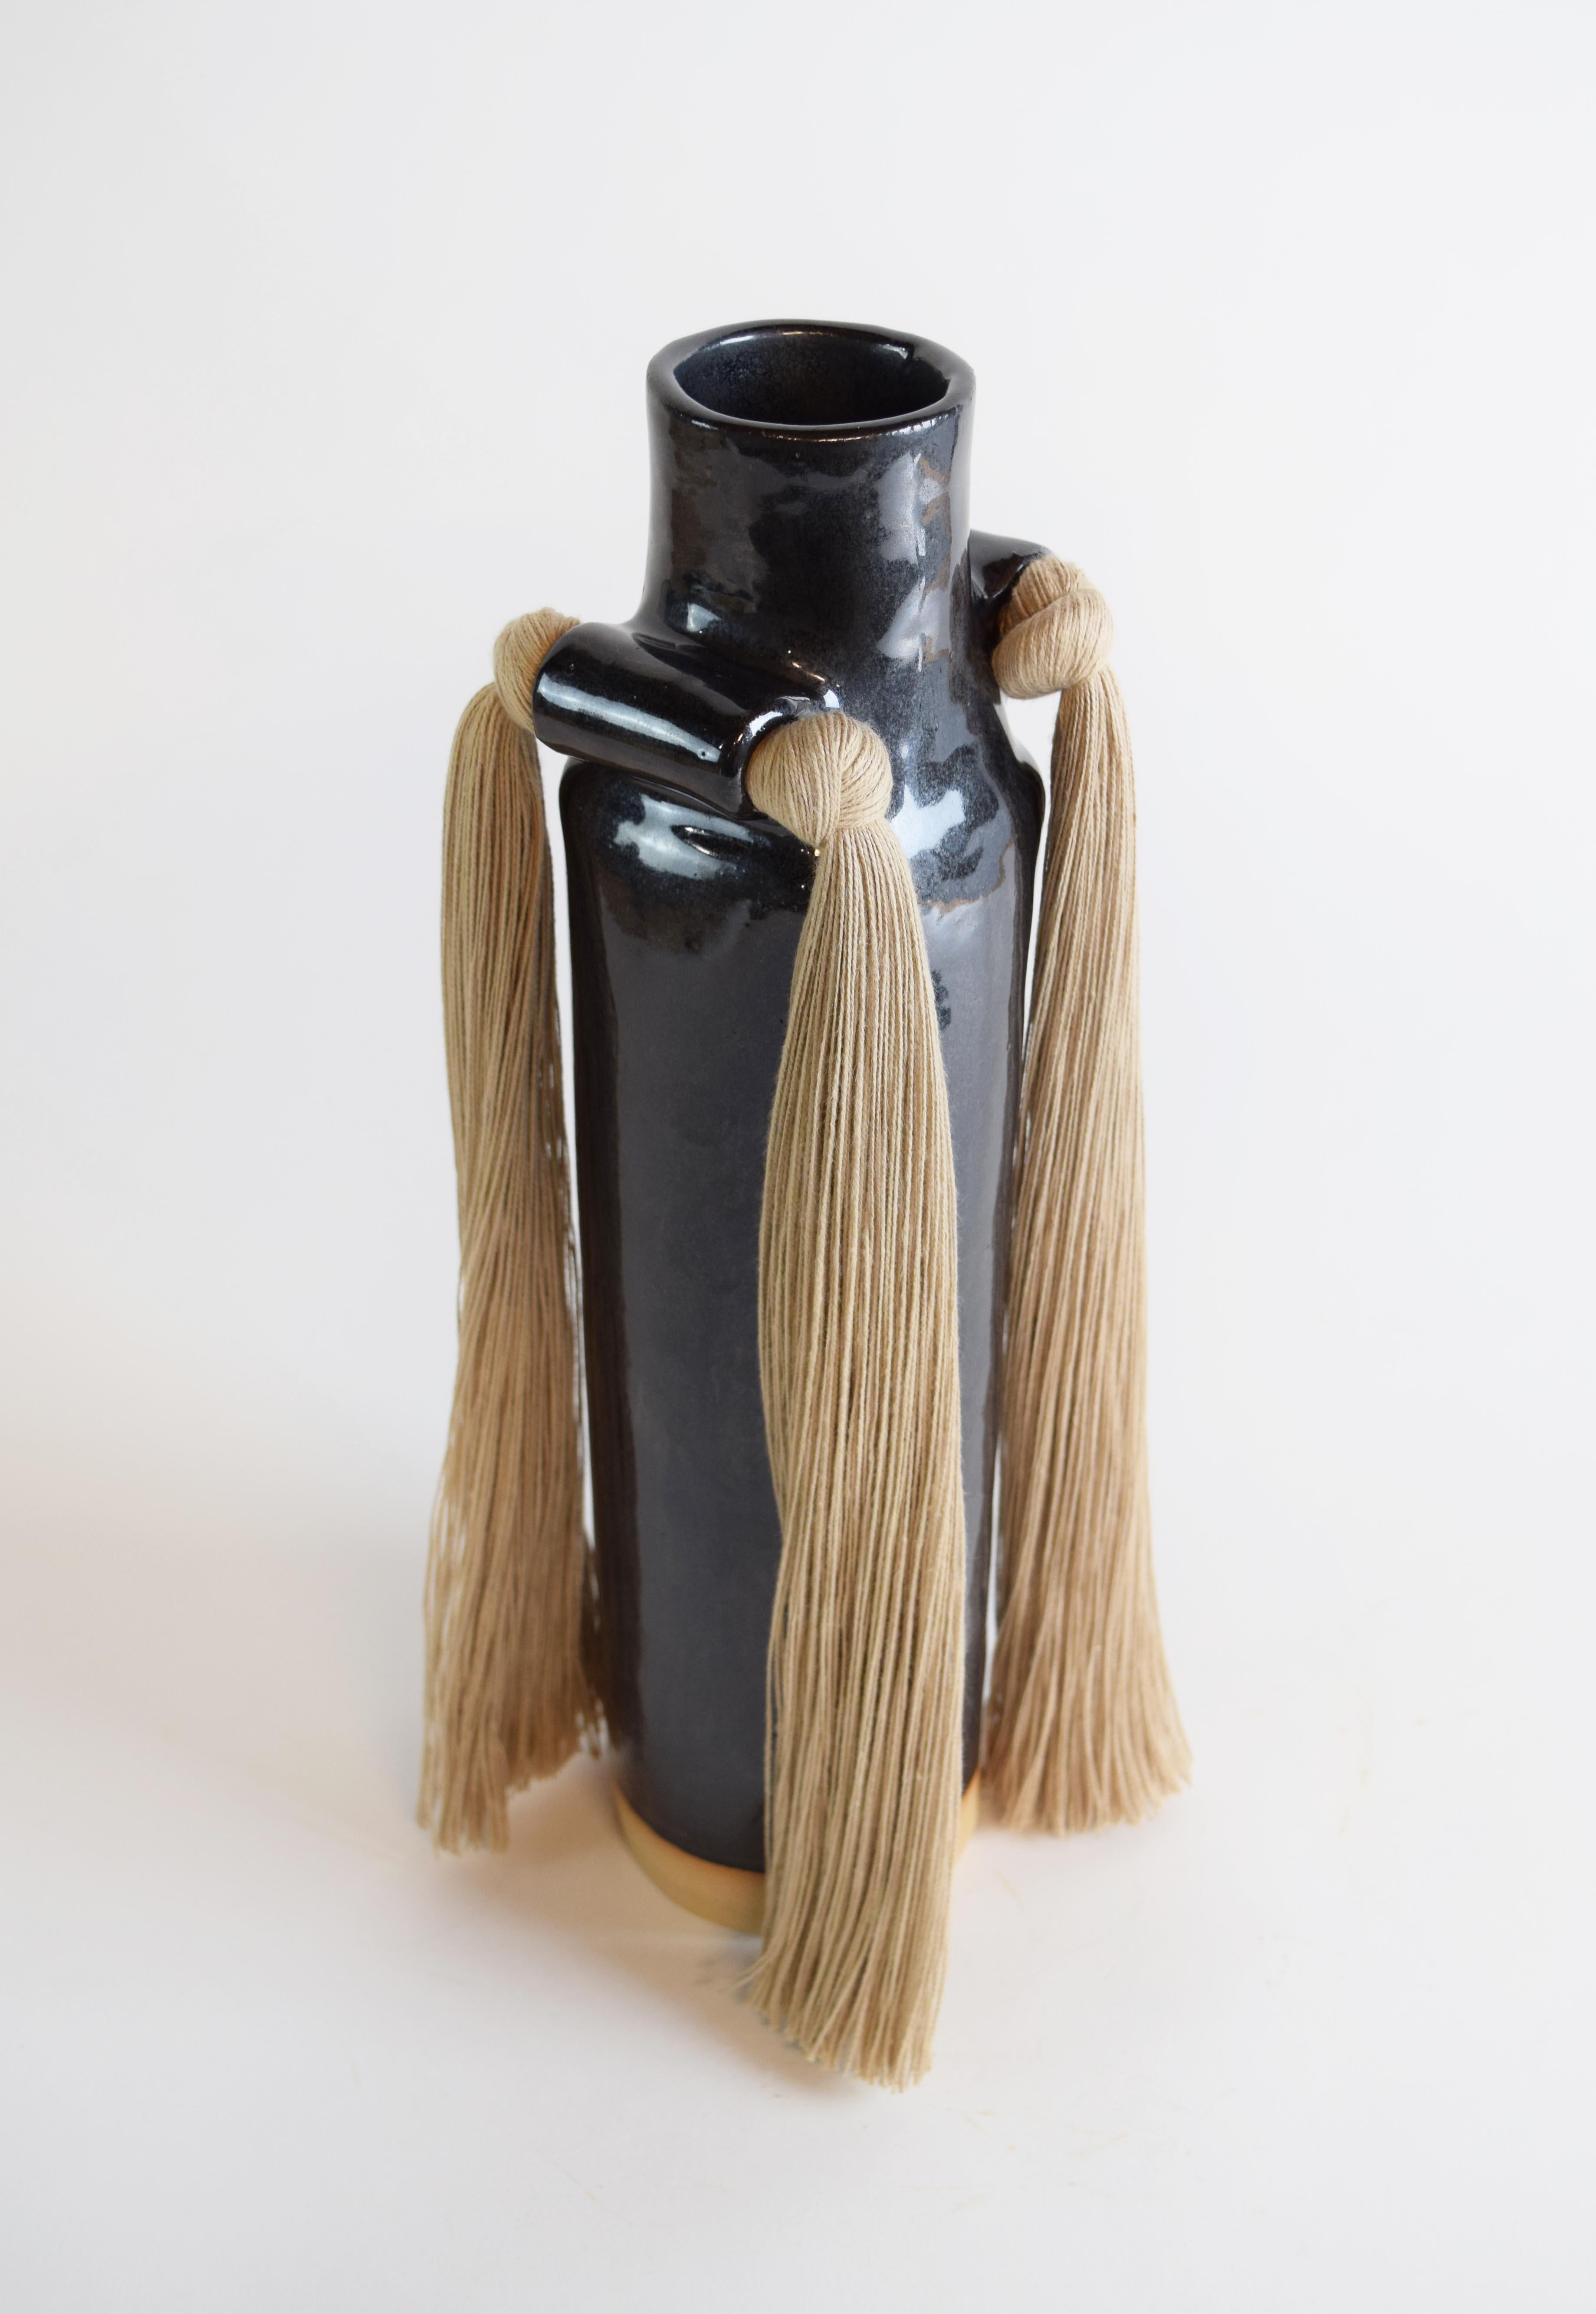 American Handmade Ceramic Vase #703 in Black Glaze with Beige Cotton Fringe Detail For Sale